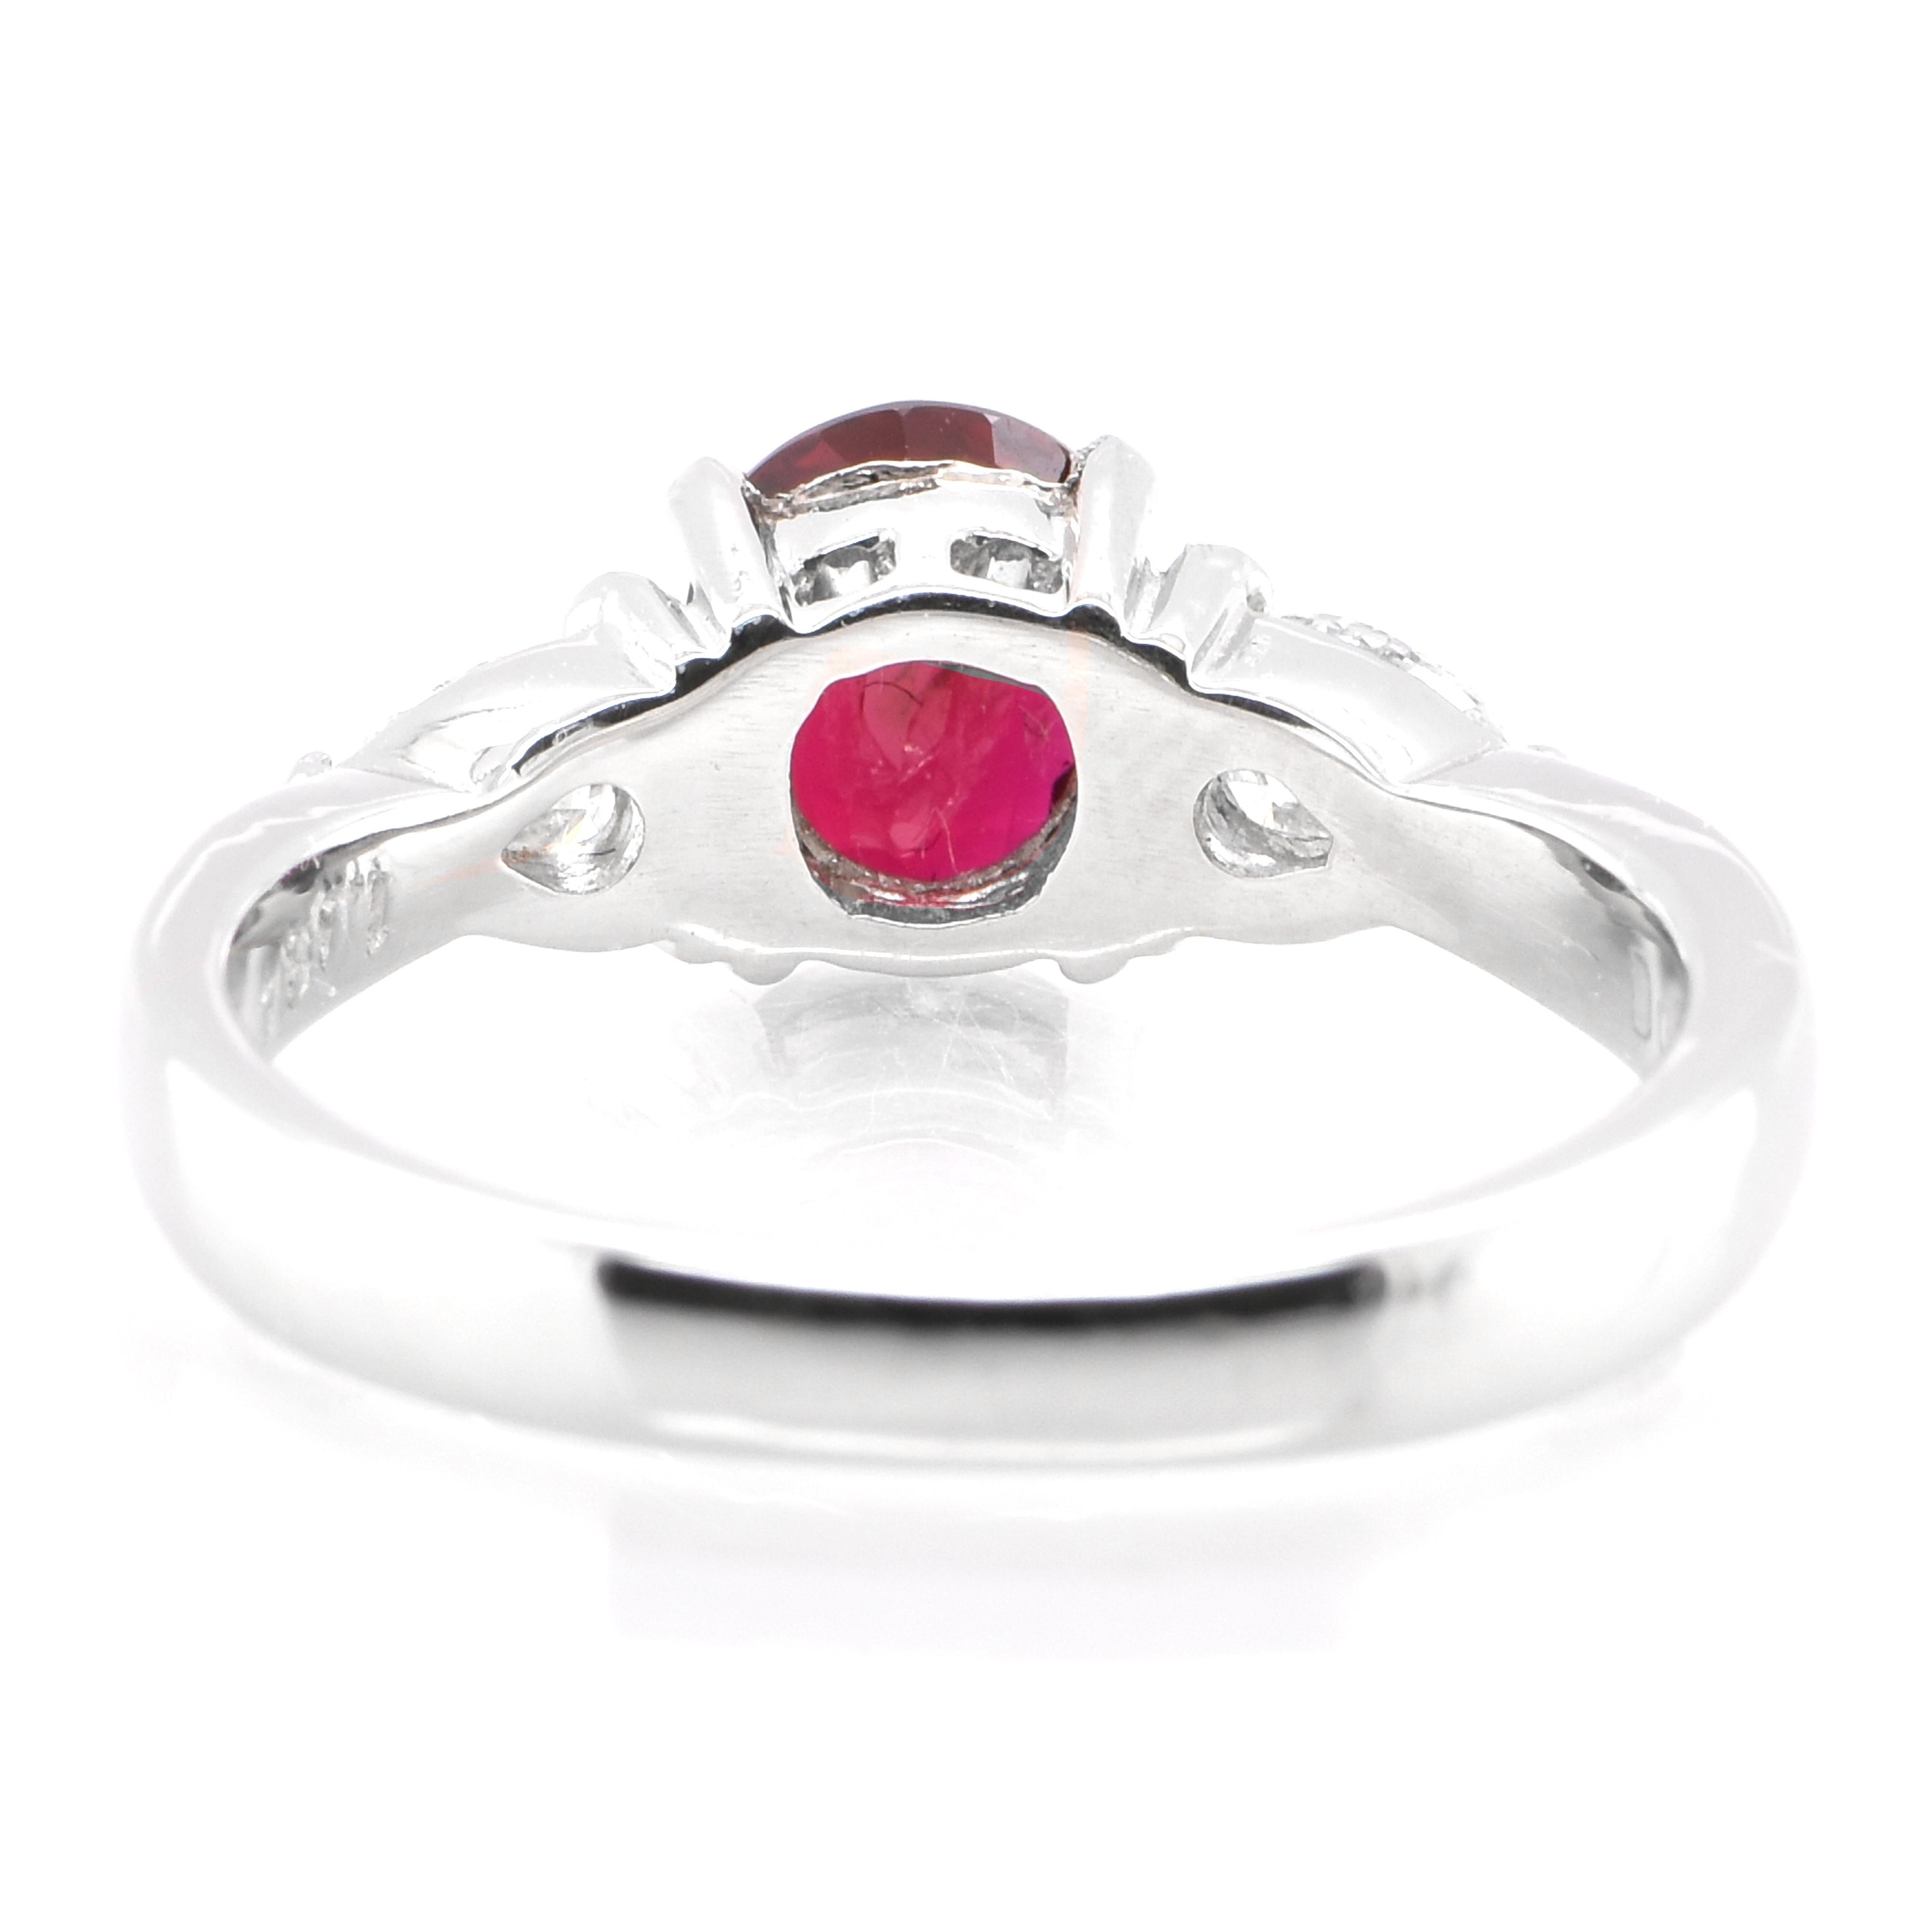 Women's 1.08 Carat Natural Ruby and Diamond Three-Stone Ring Set in Platinum